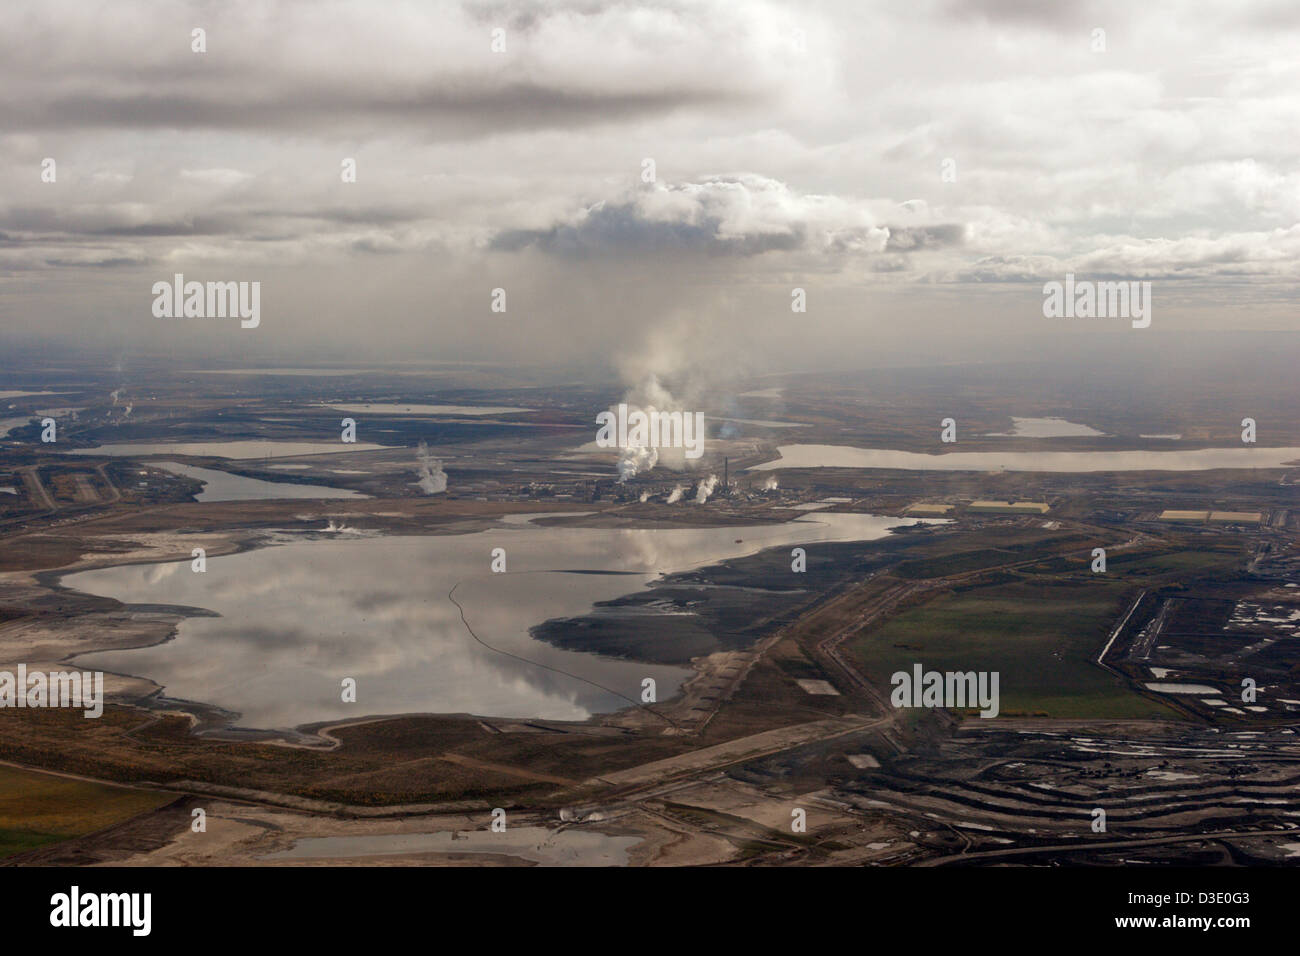 Ölsand Alberta Luftbild Tar sands Fort McMurray, Kanada Stockfoto